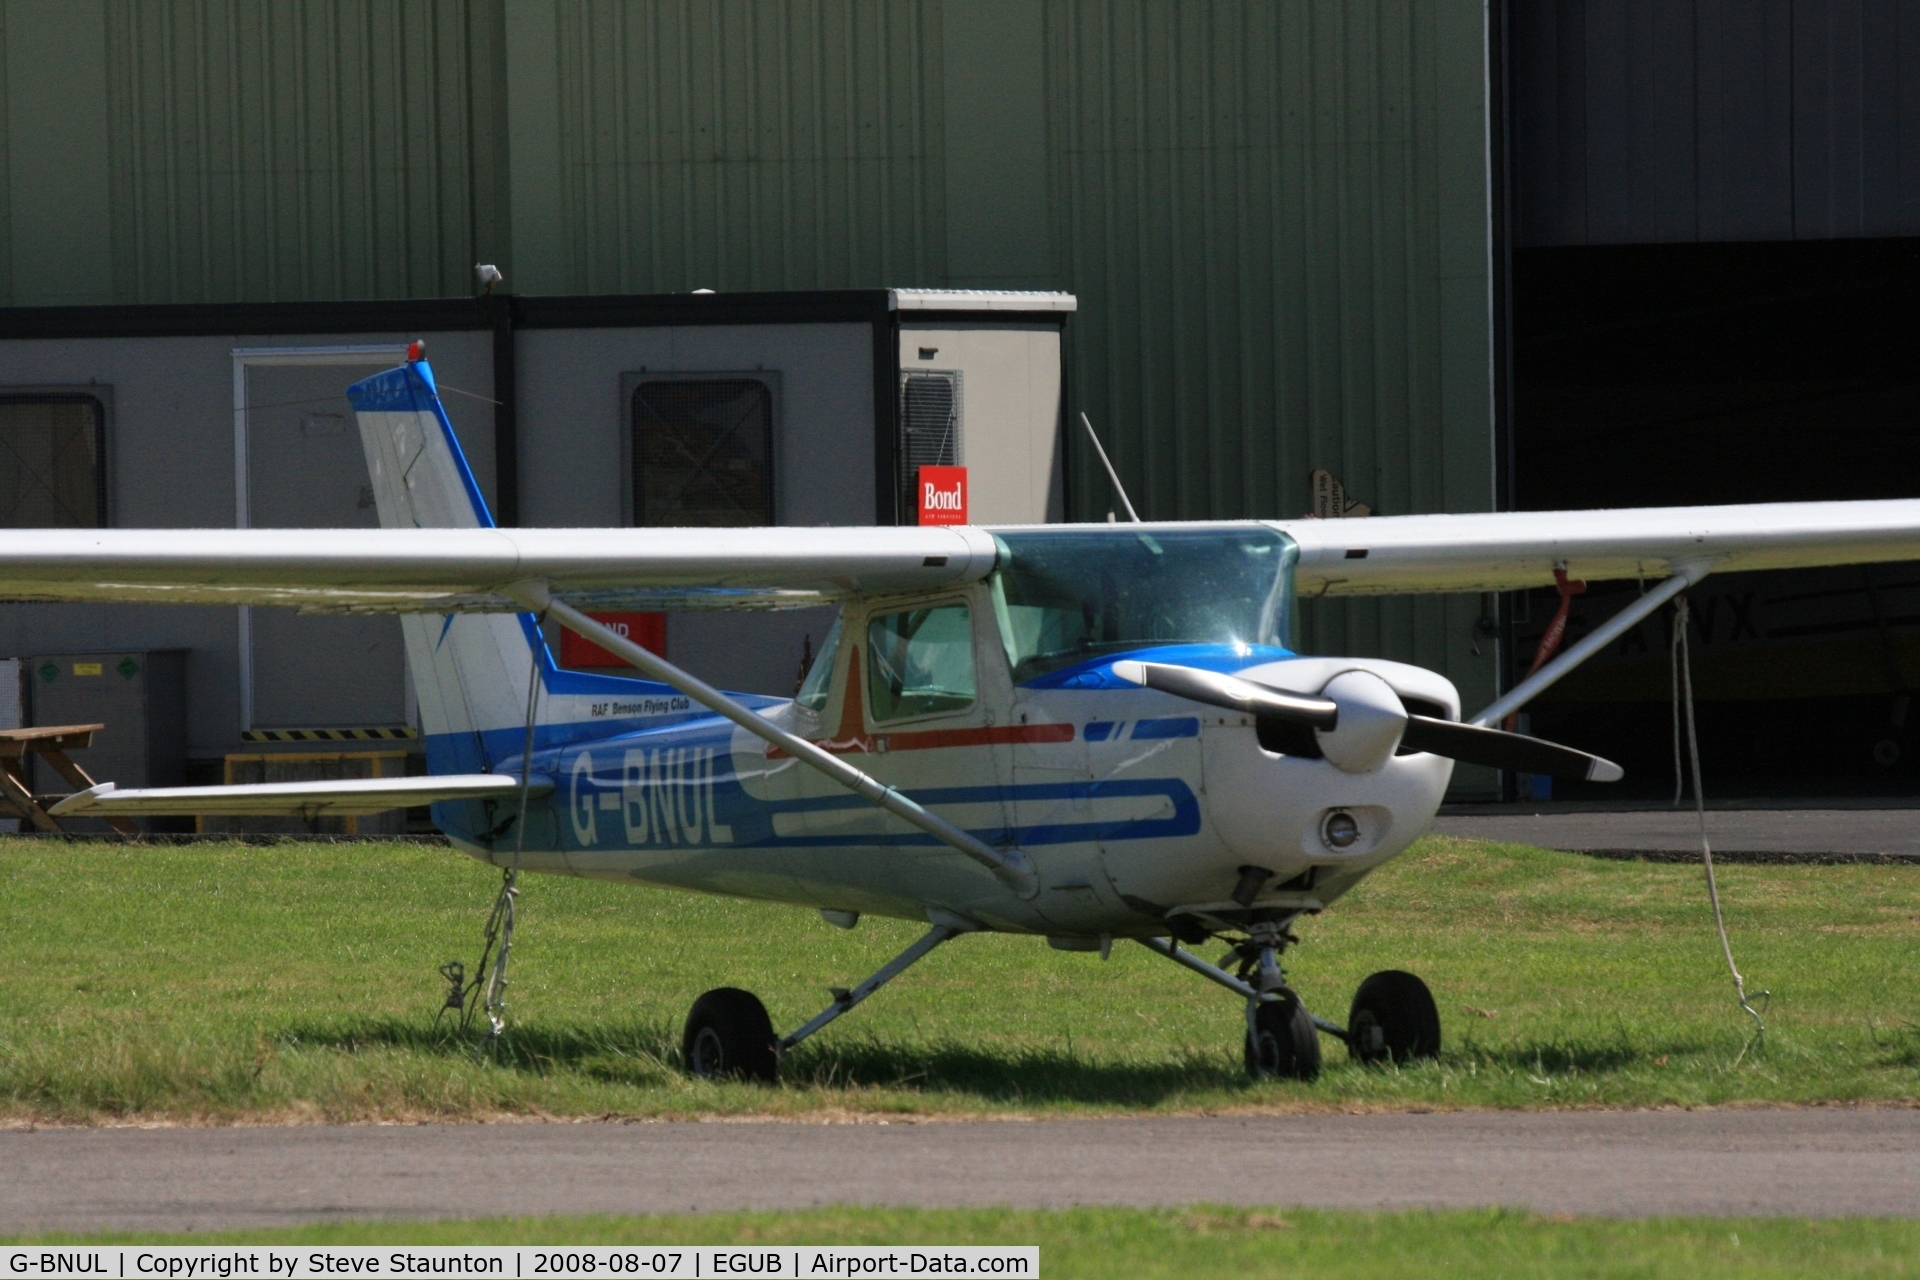 G-BNUL, 1980 Cessna 152 C/N 152-84486, RAF Benson Families Day, RAF Benson, Oxfordshire, England - August 2008